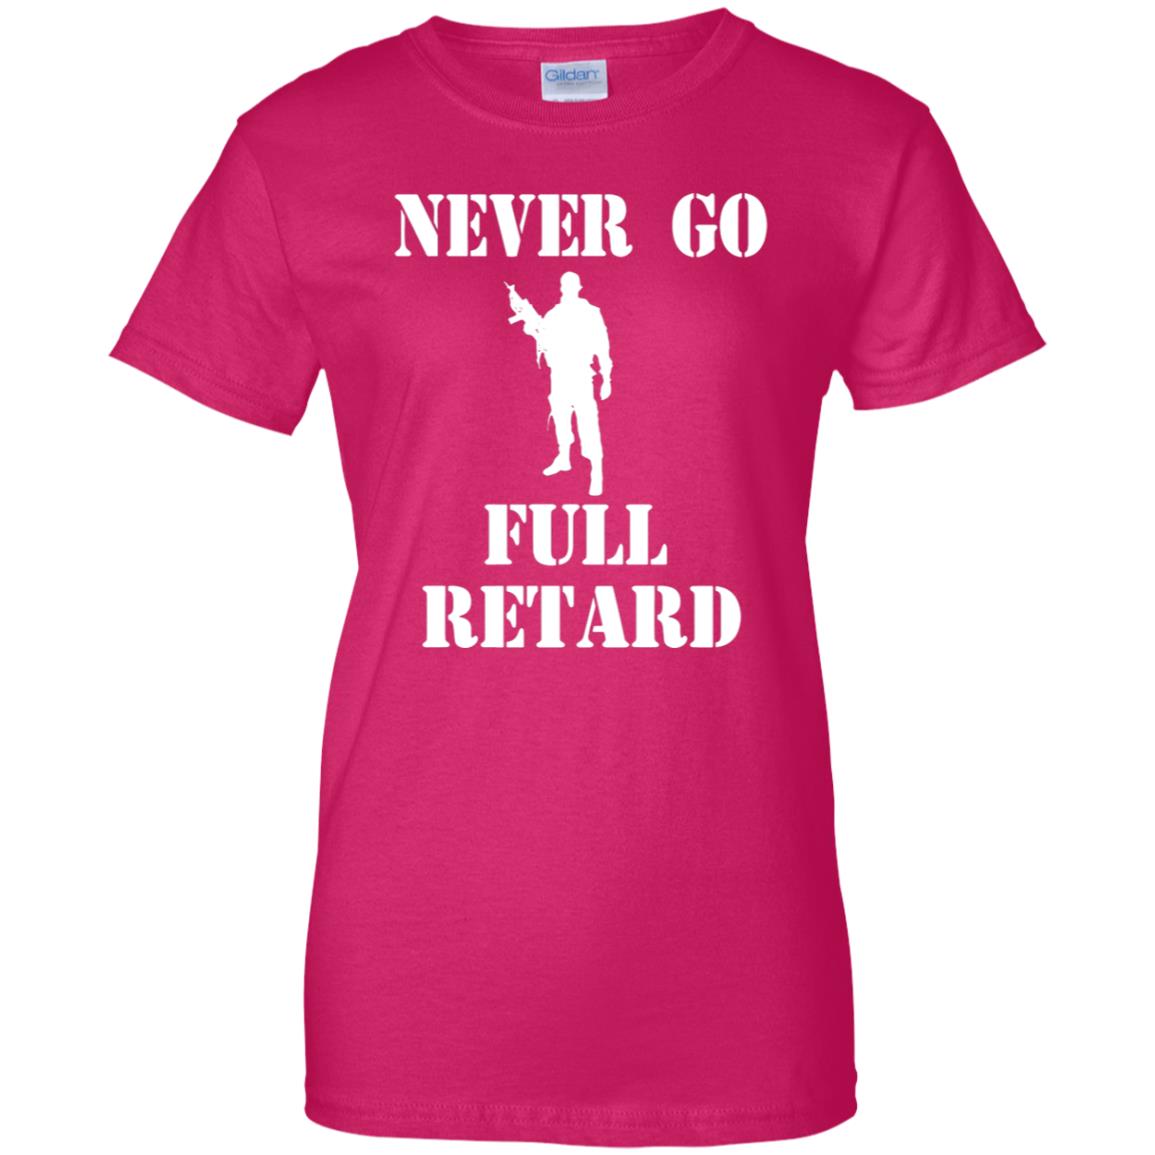 Never Go Full Retard Tshirt - 10% Off - FavorMerch